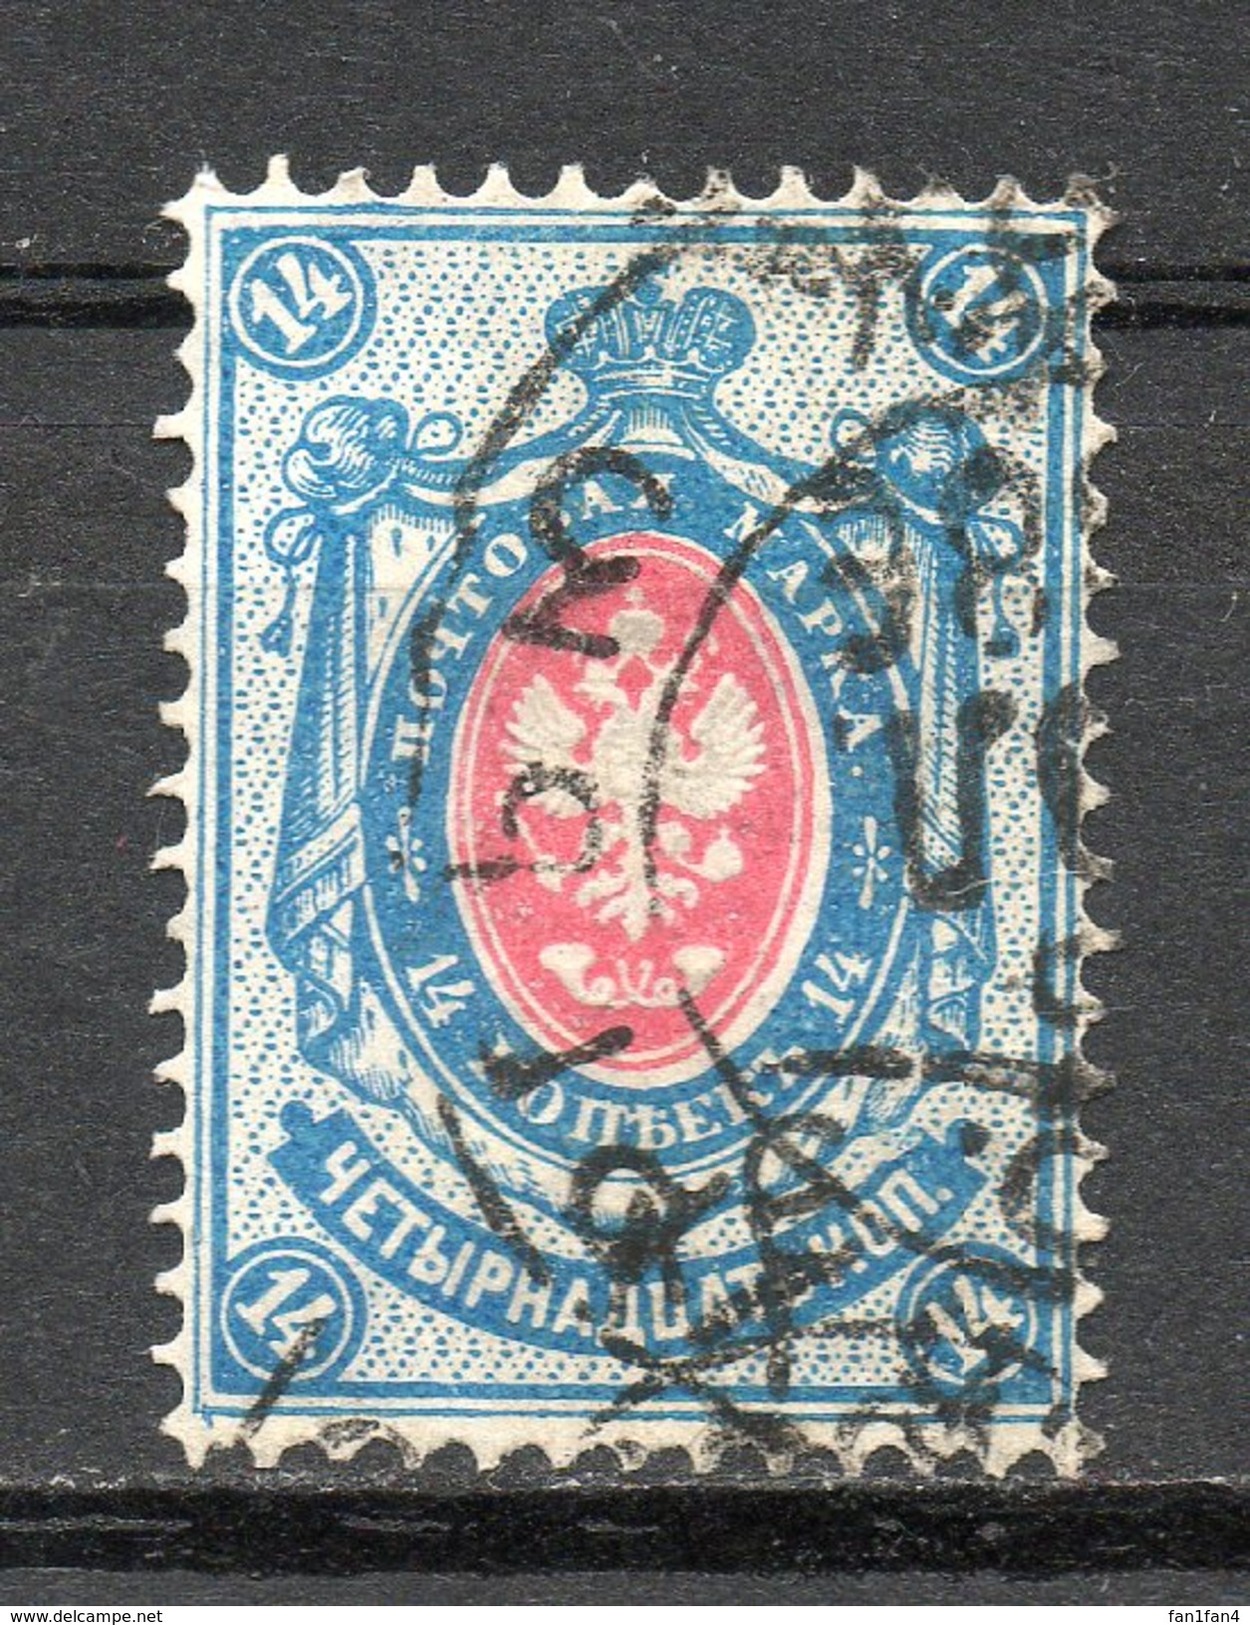 RUSSIE - 1883-85 - (Empire De Russie) - (Armoiries) - N° 33 - 14 K. Bleu Et Rose - (Vergé Horizontalement) - Used Stamps